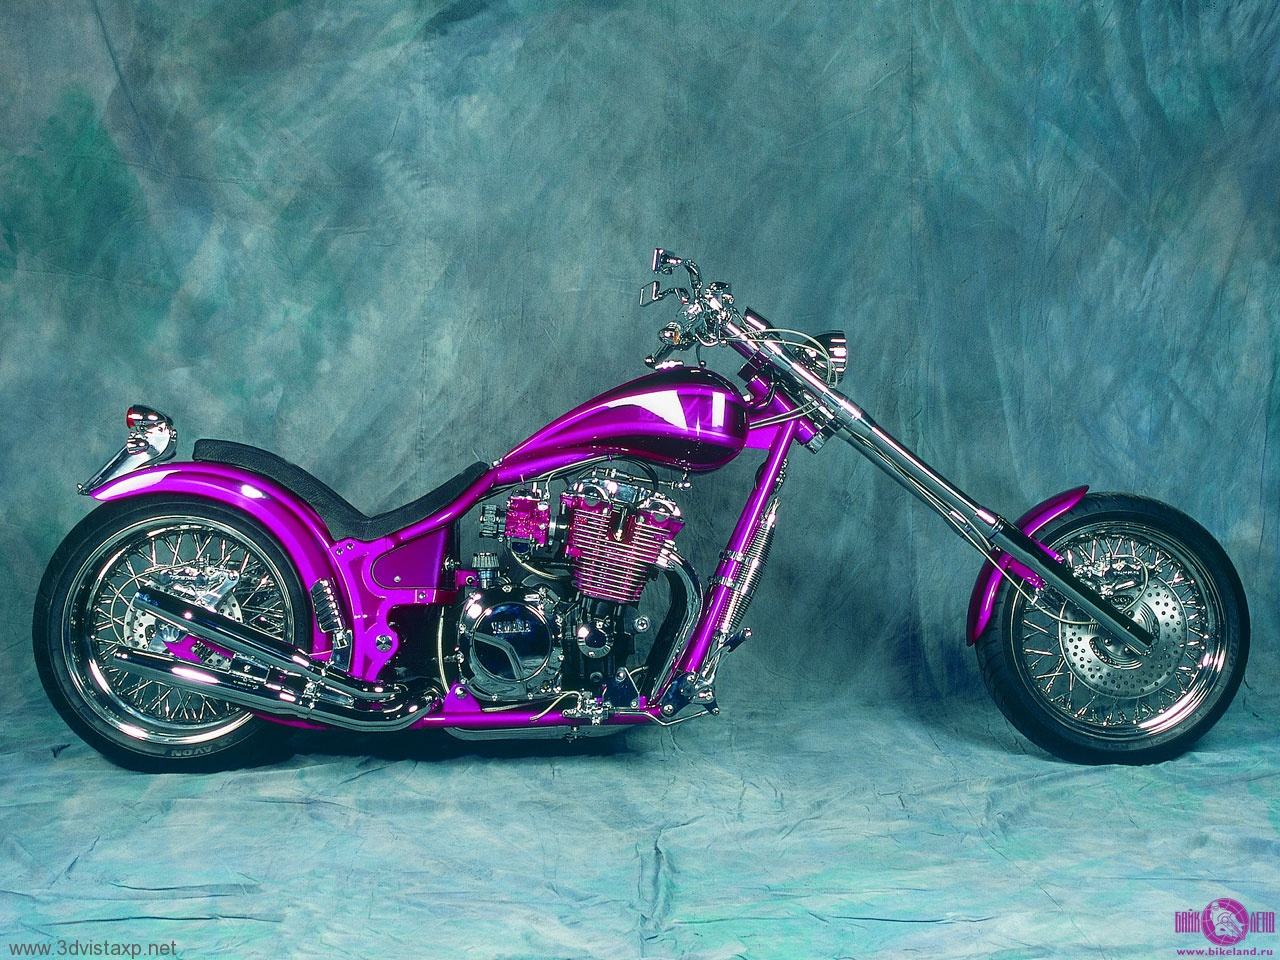 Cool Motorcycle Wallpapers - WallpaperSafari